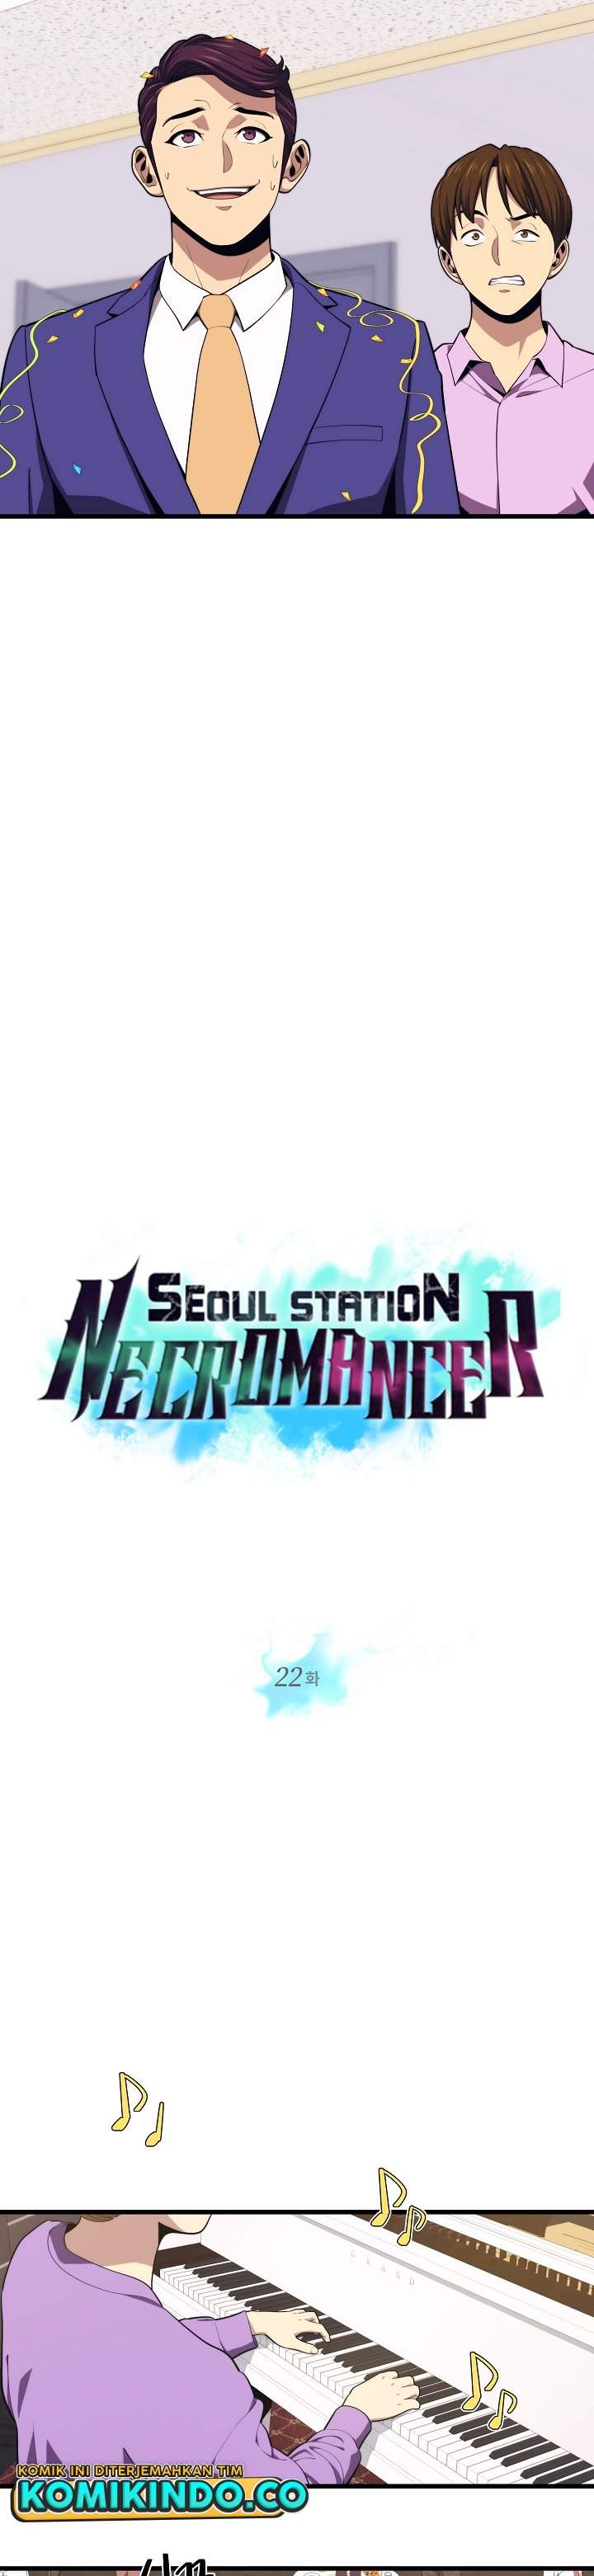 Seoul Station Necromancer Chapter 22